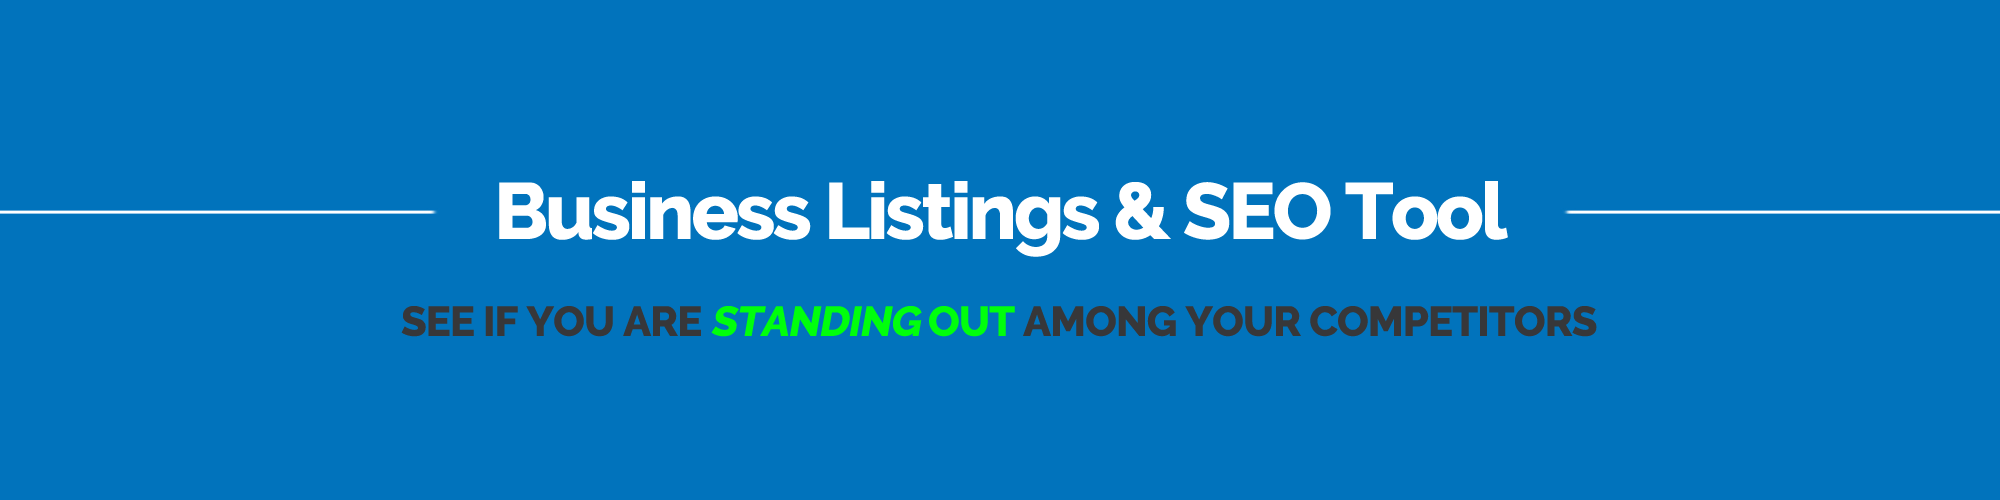 Business_Listings_SEO_Tool-SIX-Marketing-header.png